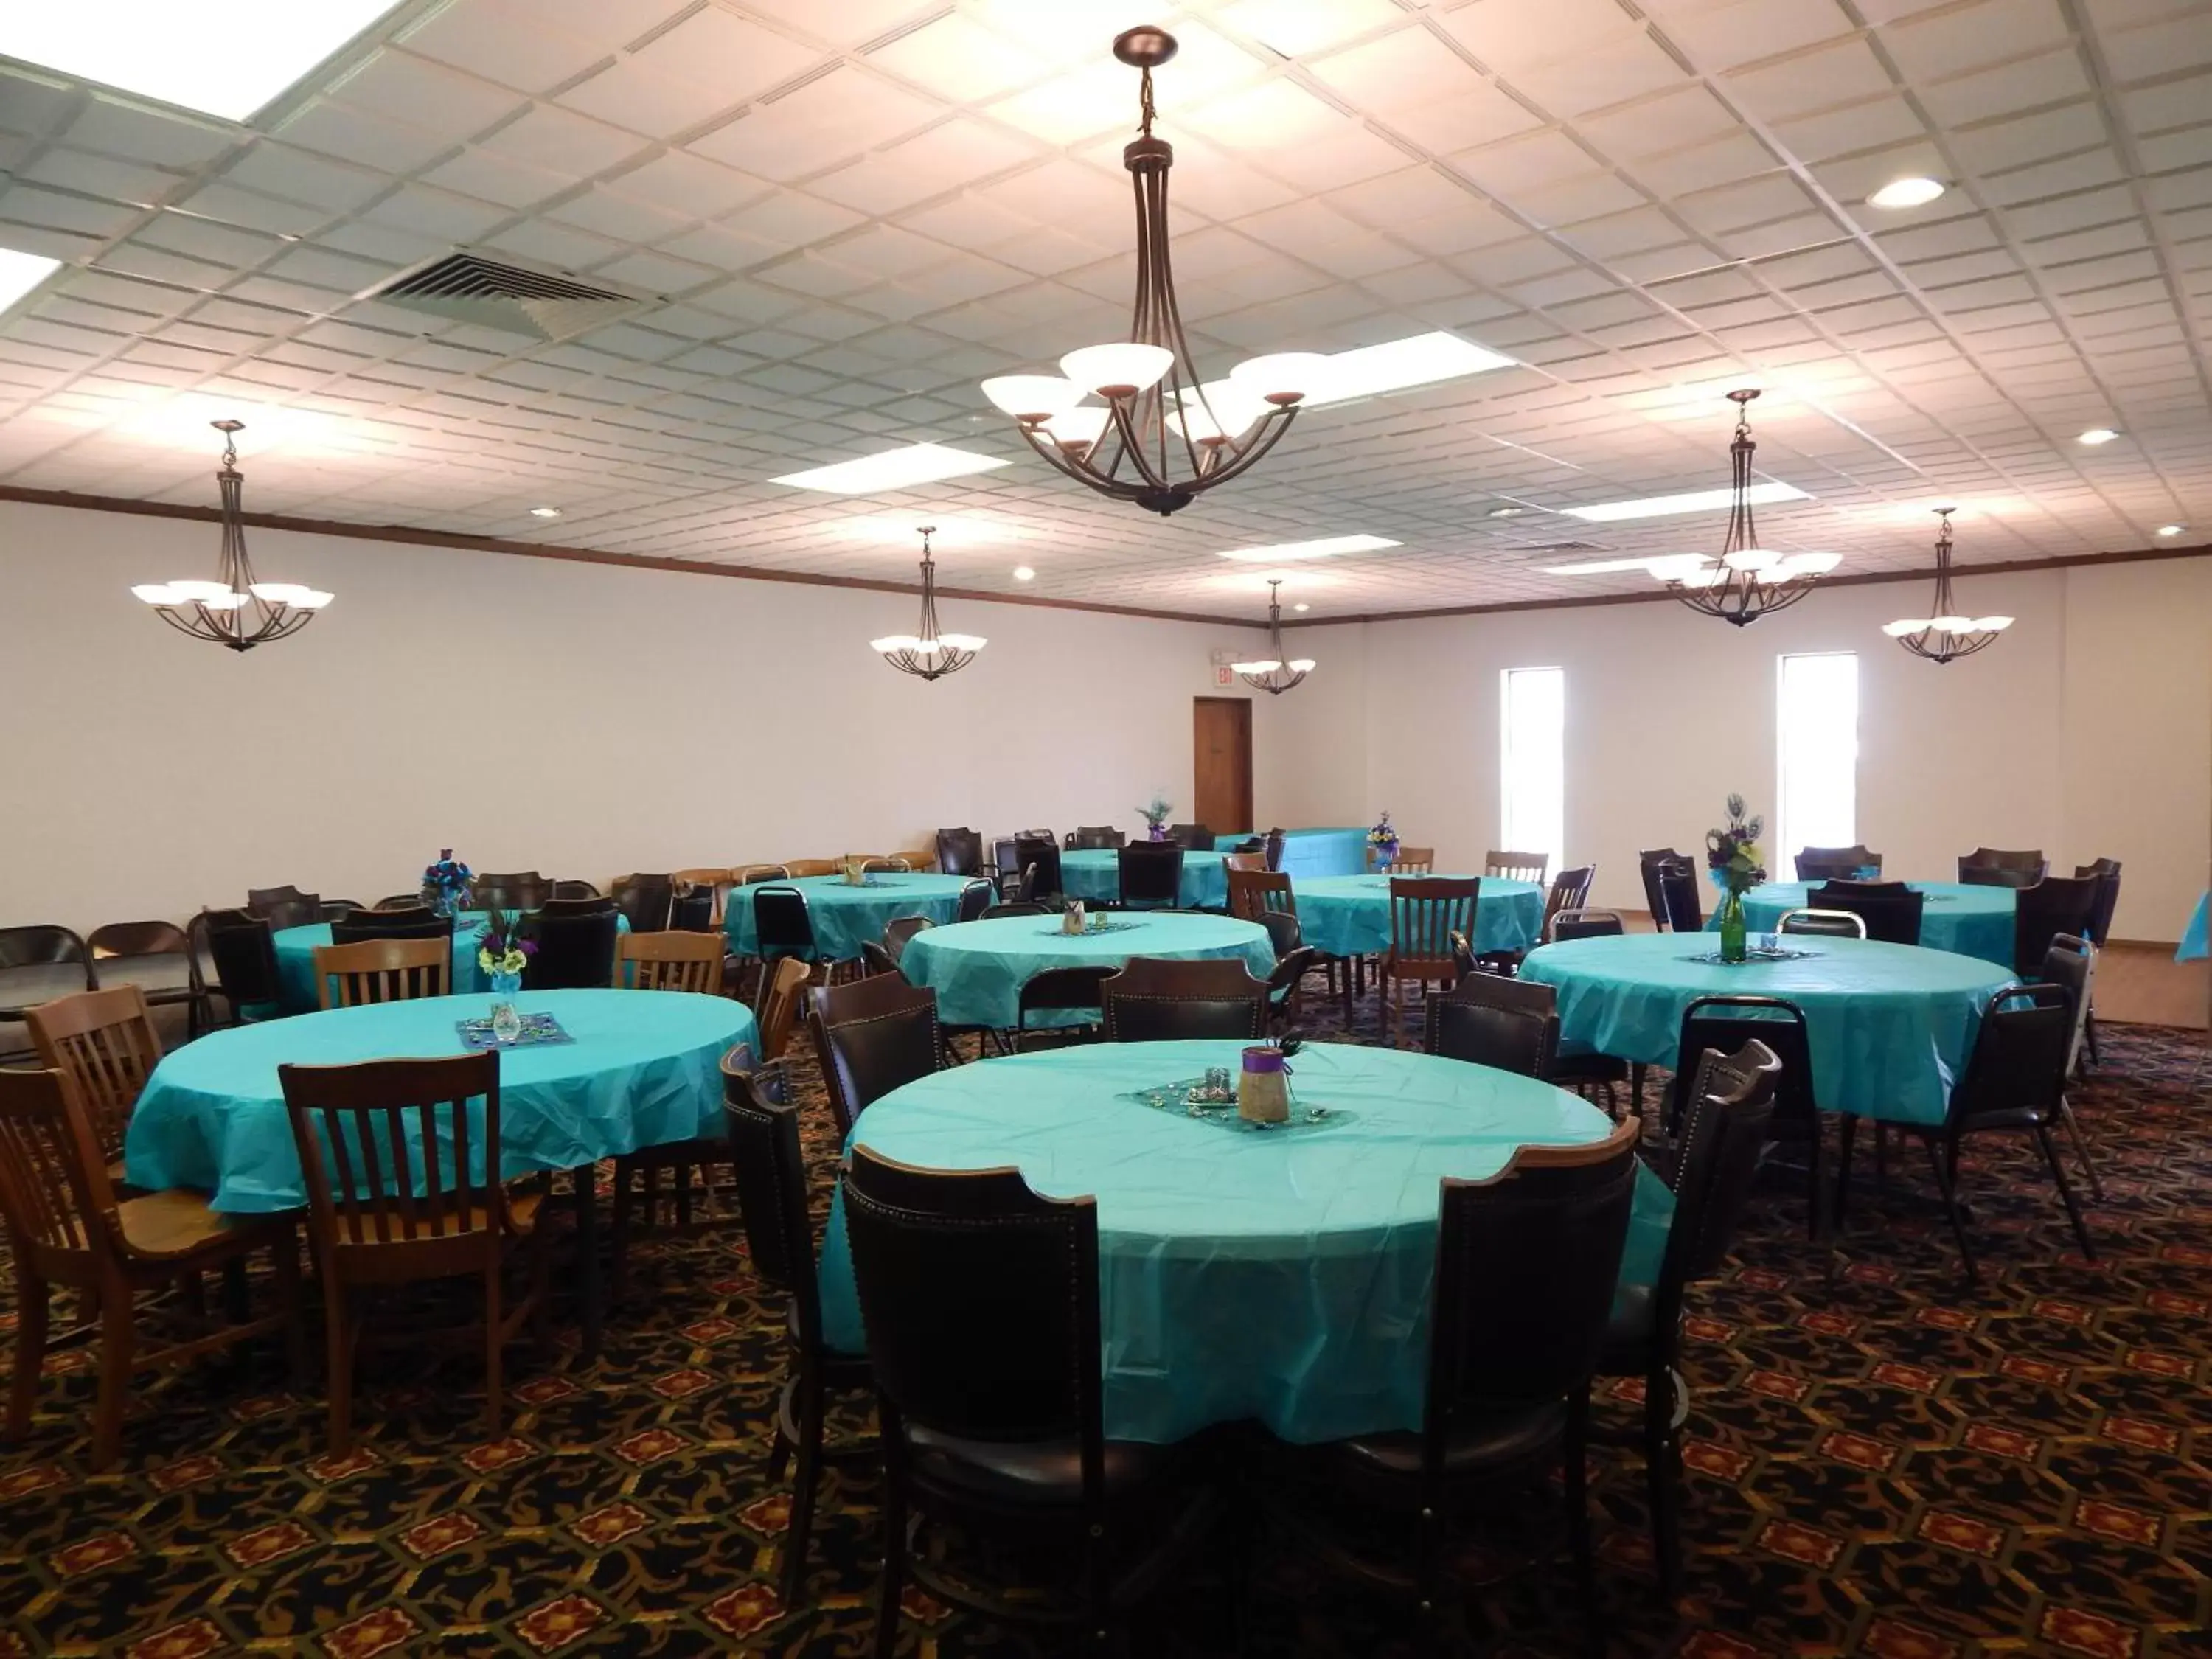 Banquet/Function facilities, Banquet Facilities in Quality Inn